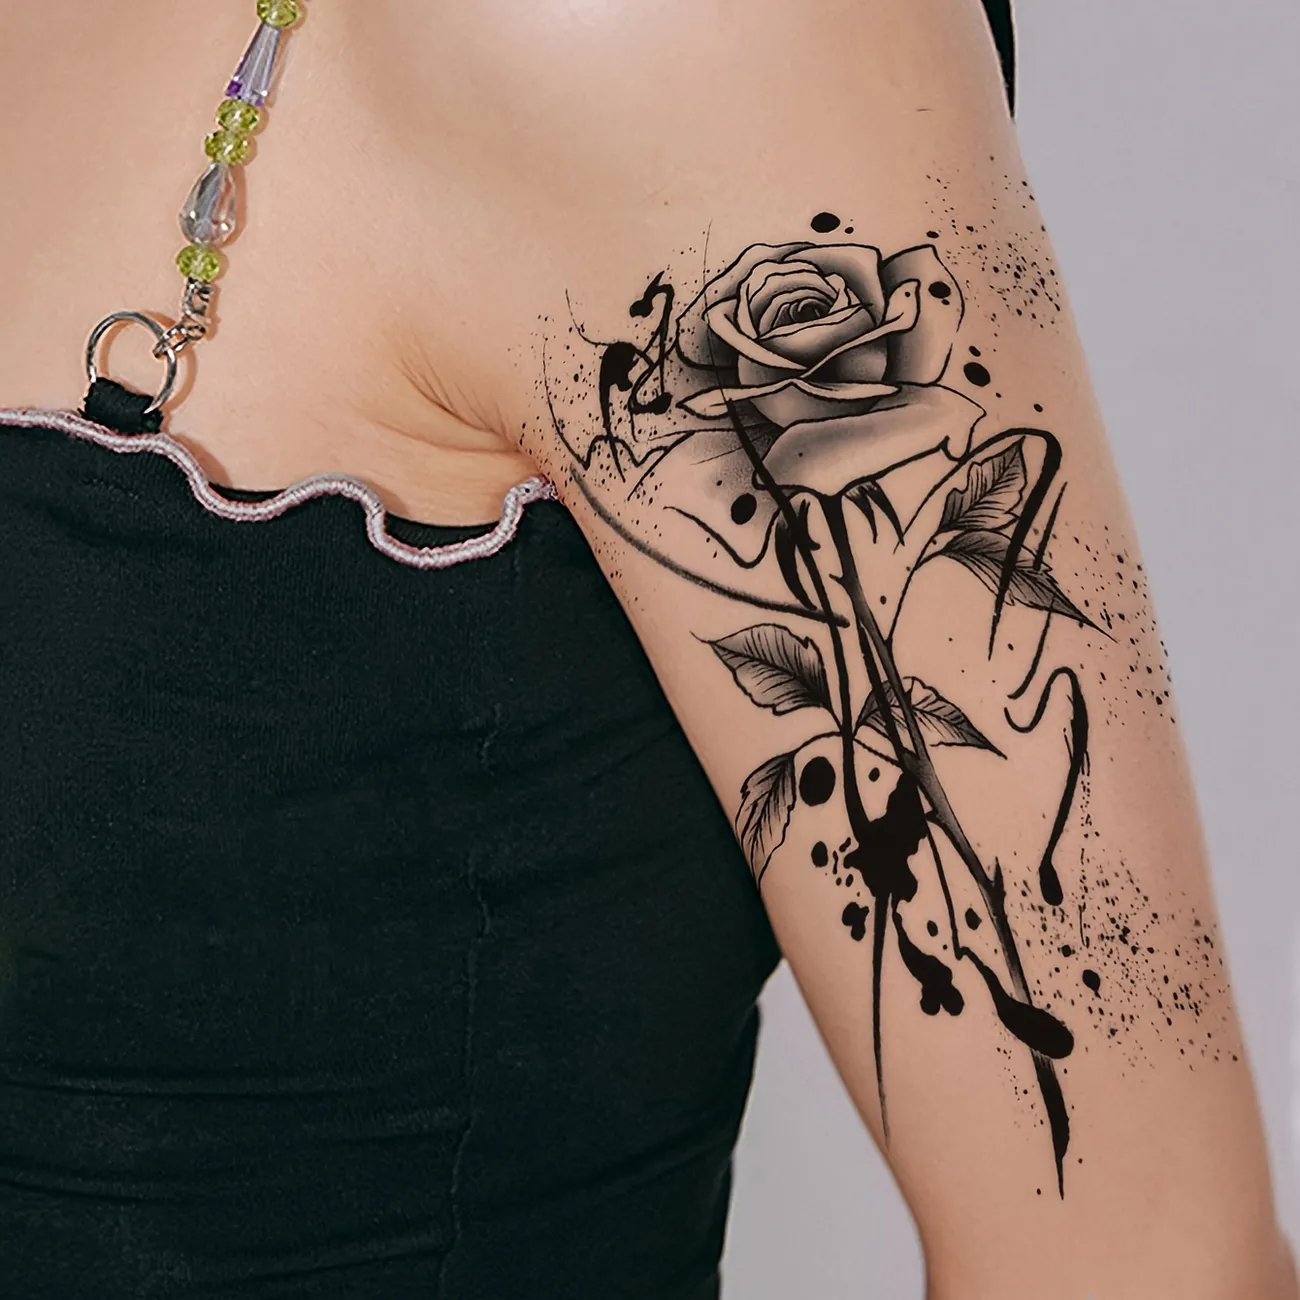 Waterproof Black Rose Wrist Tattoo Stickers Lasting 2 5 Days For Men And Women Realistic Simulation Tattoo Design